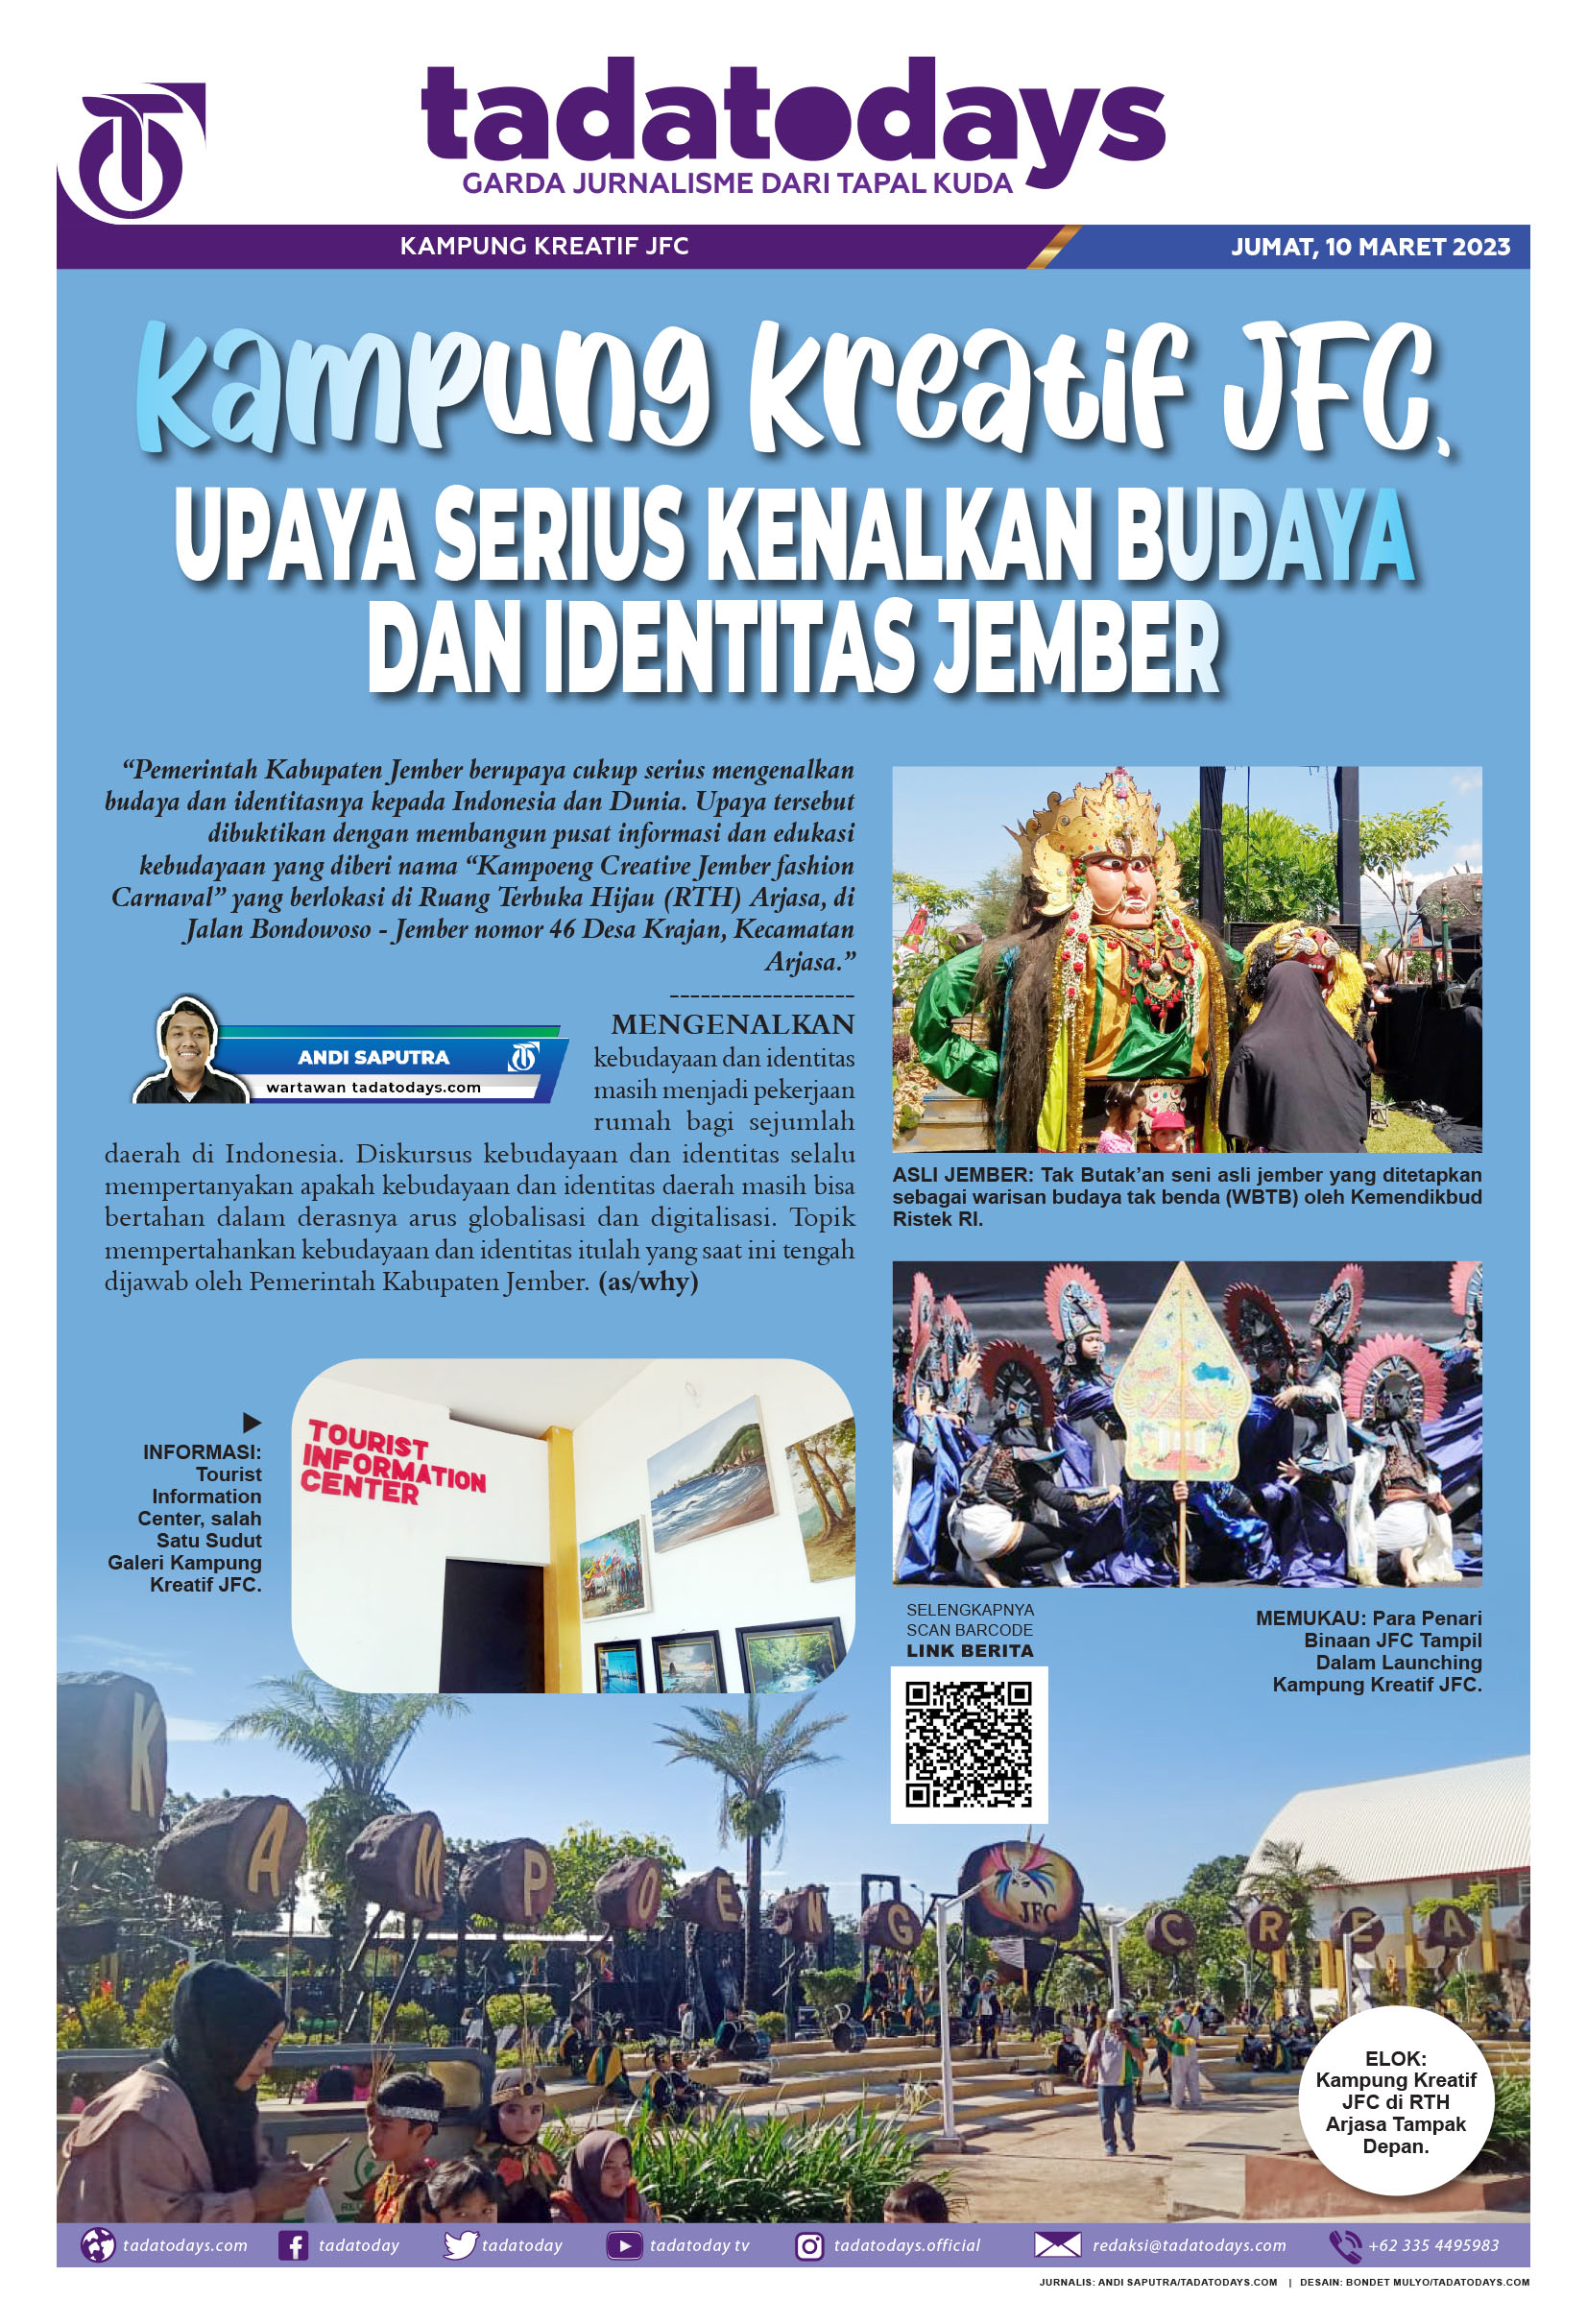 Kampung Kreatif JFC, Upaya Serius Mengenalkan Budaya dan Identitas Jember